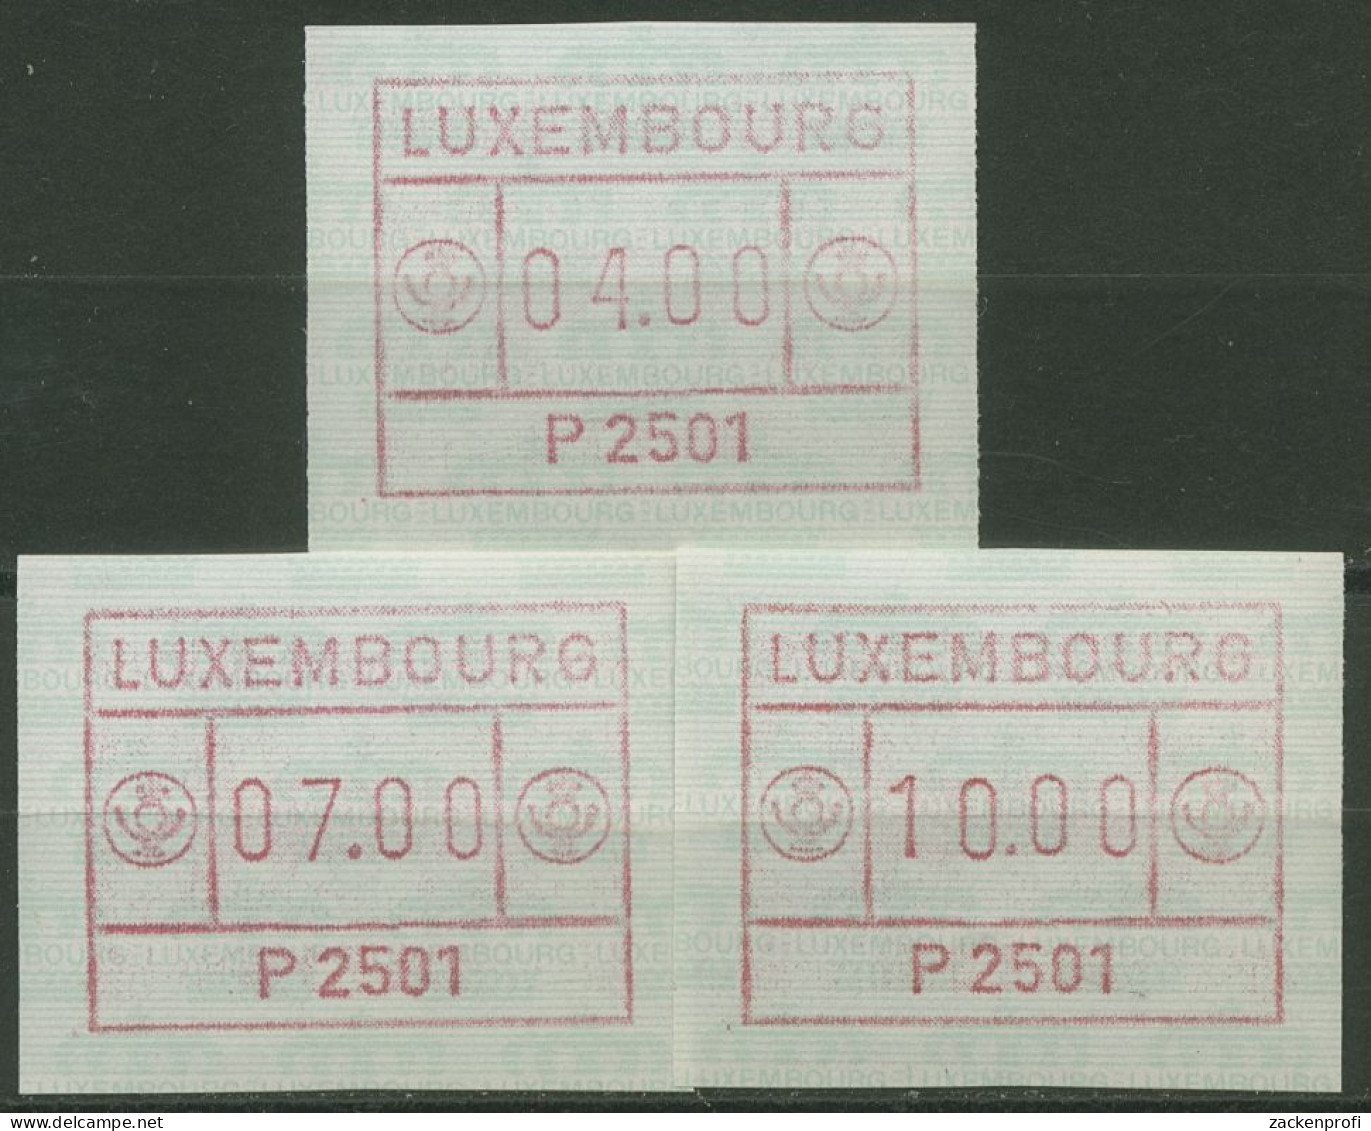 Luxemburg 1983 Automatenmarke Automat P 2501 Satz 1.1.1 B S1 Postfrisch - Viñetas De Franqueo